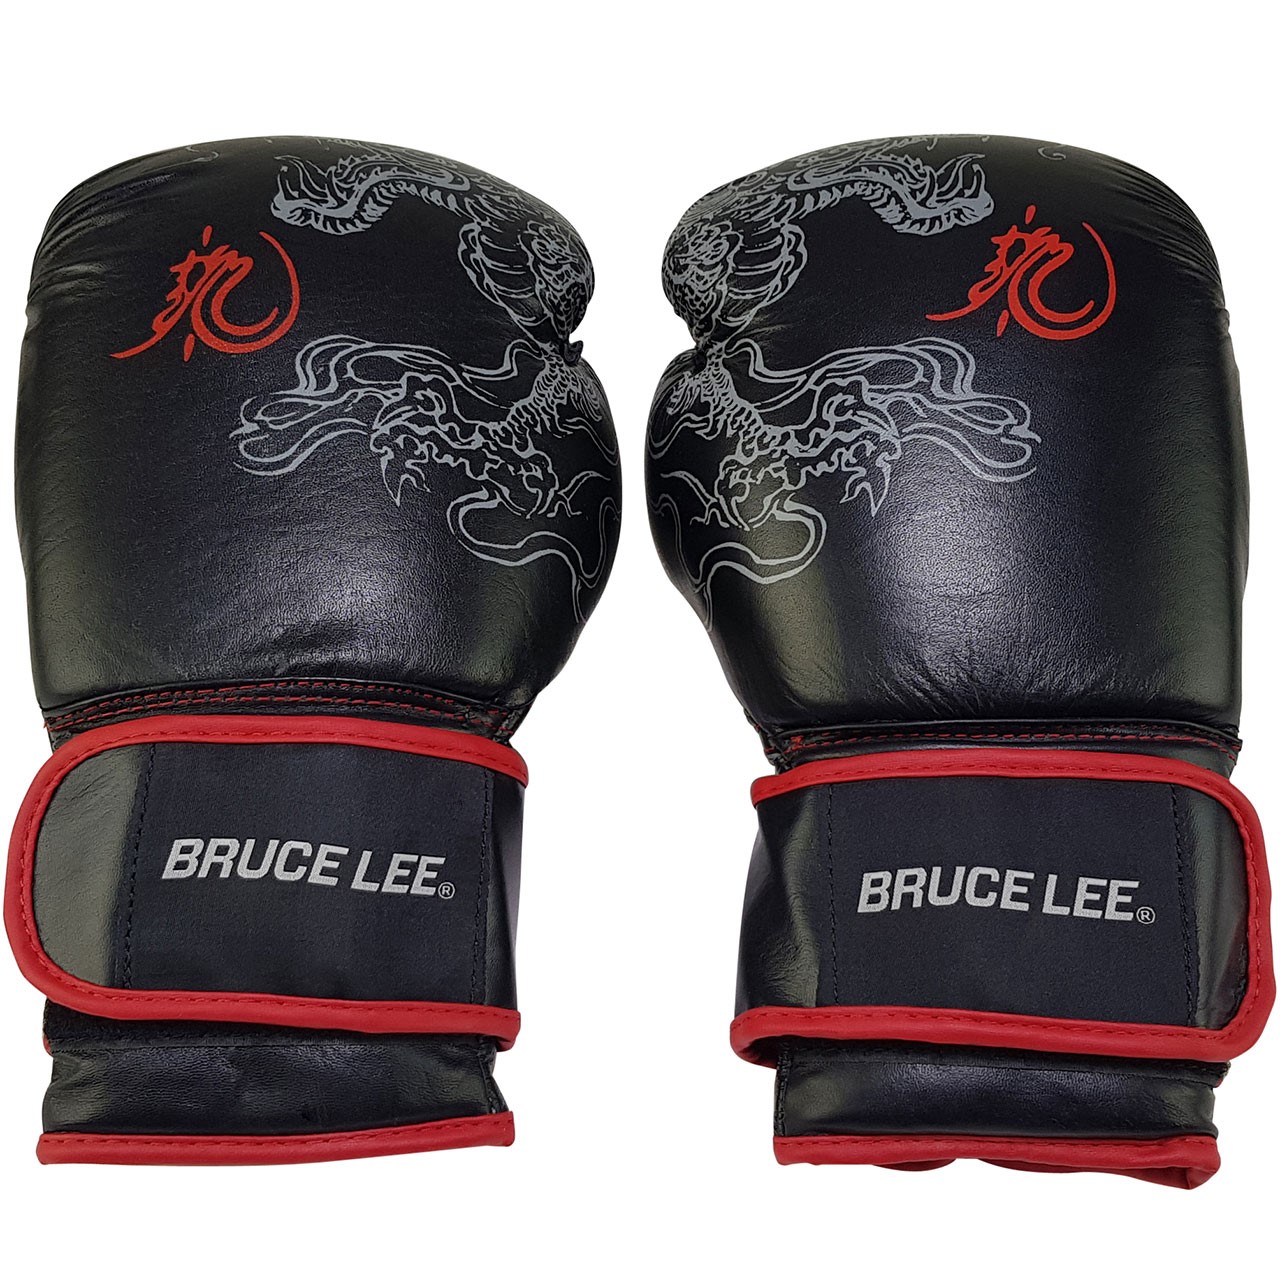 Bruce Lee Deluxe Boxing Gloves Boxhandschuhe